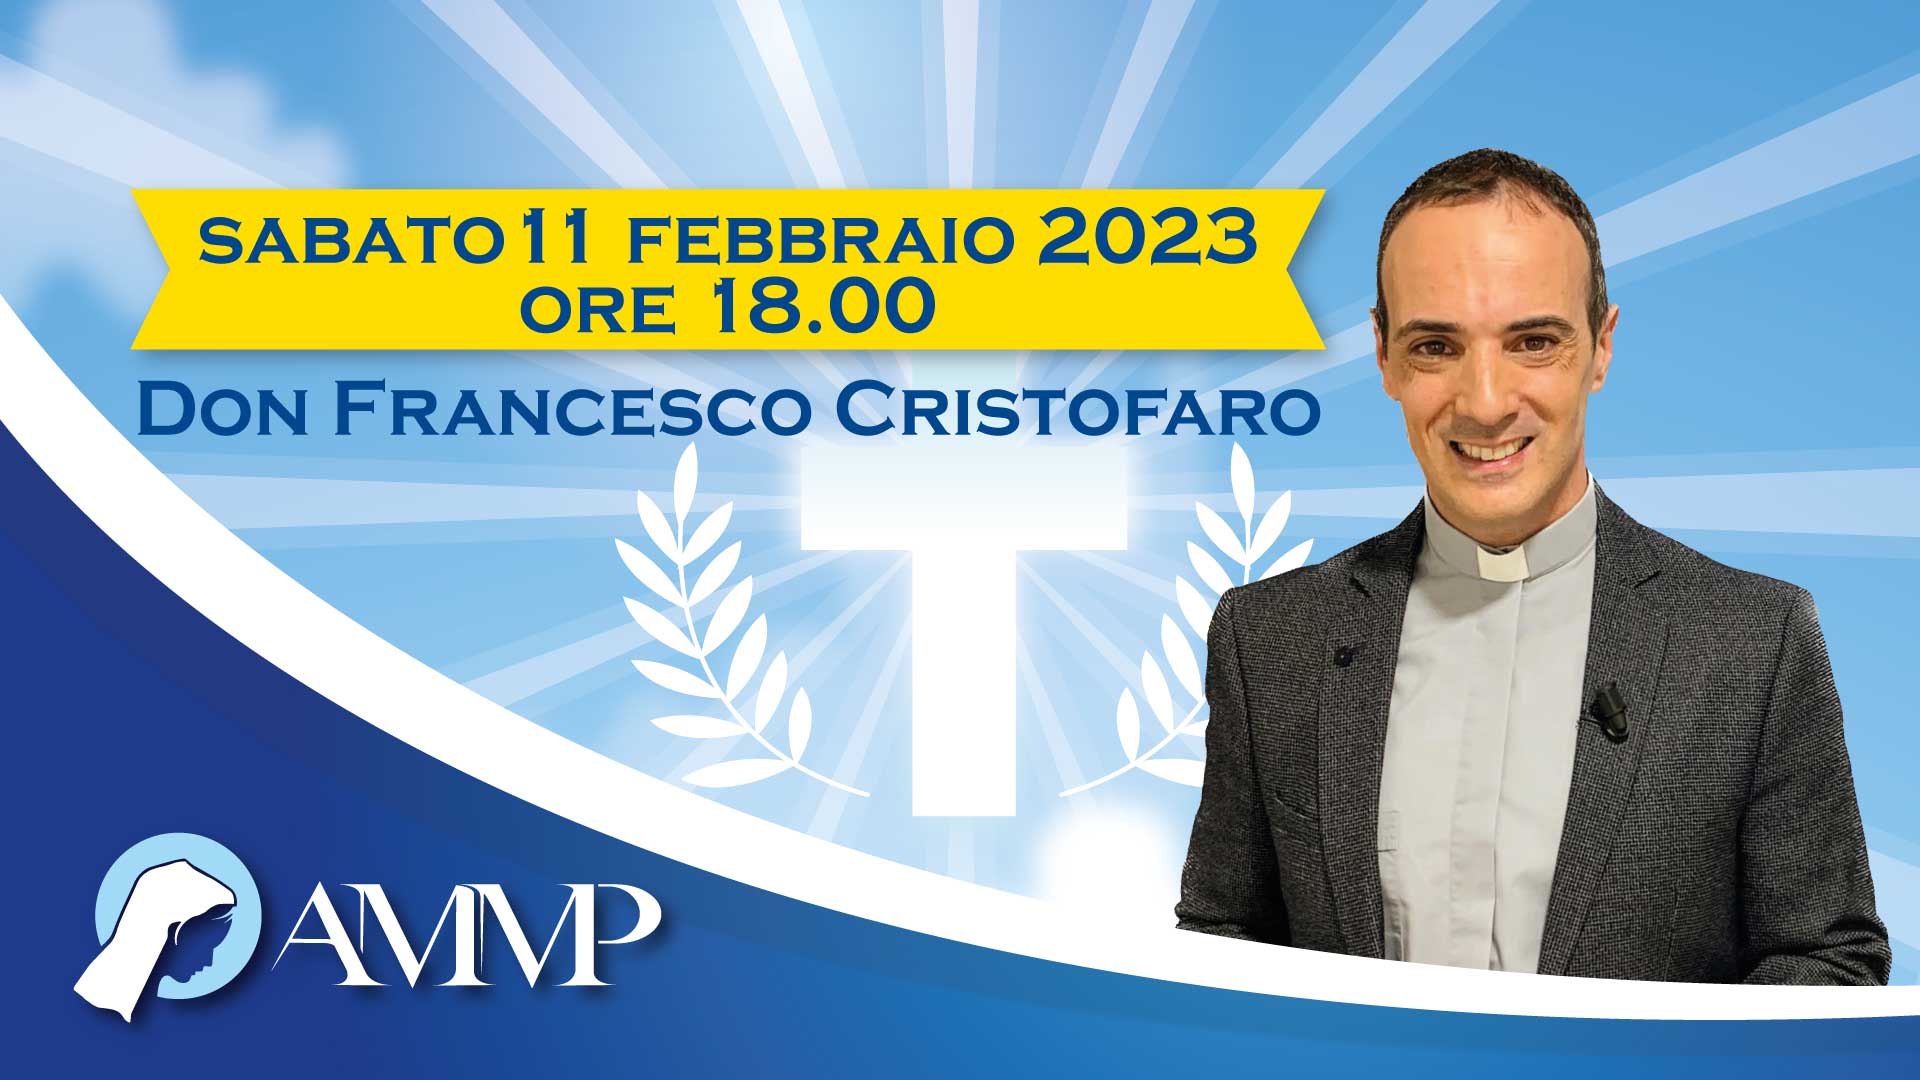 11 febbraio 2023 - incontro con Don Francesco Cristofaro